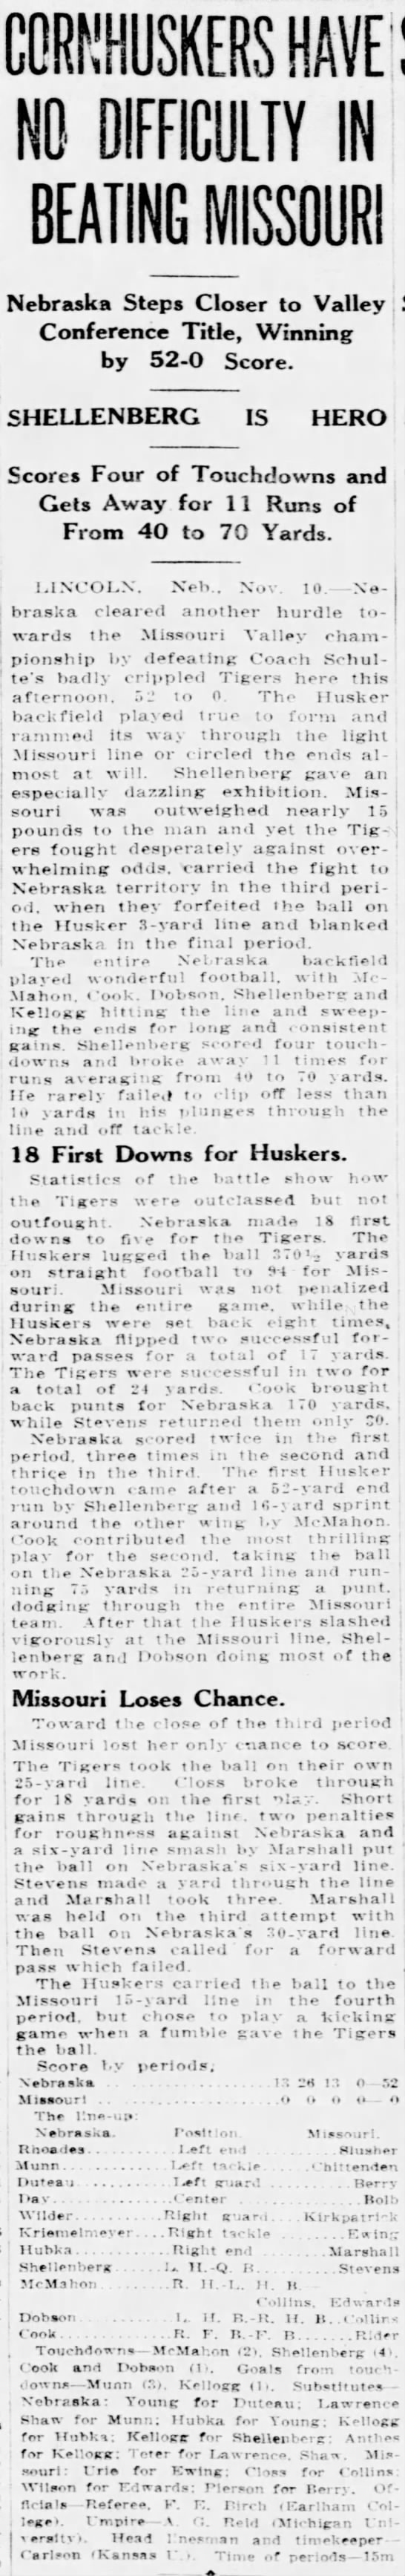 1917 Nebraska-Missouri, St. Louis paper - 